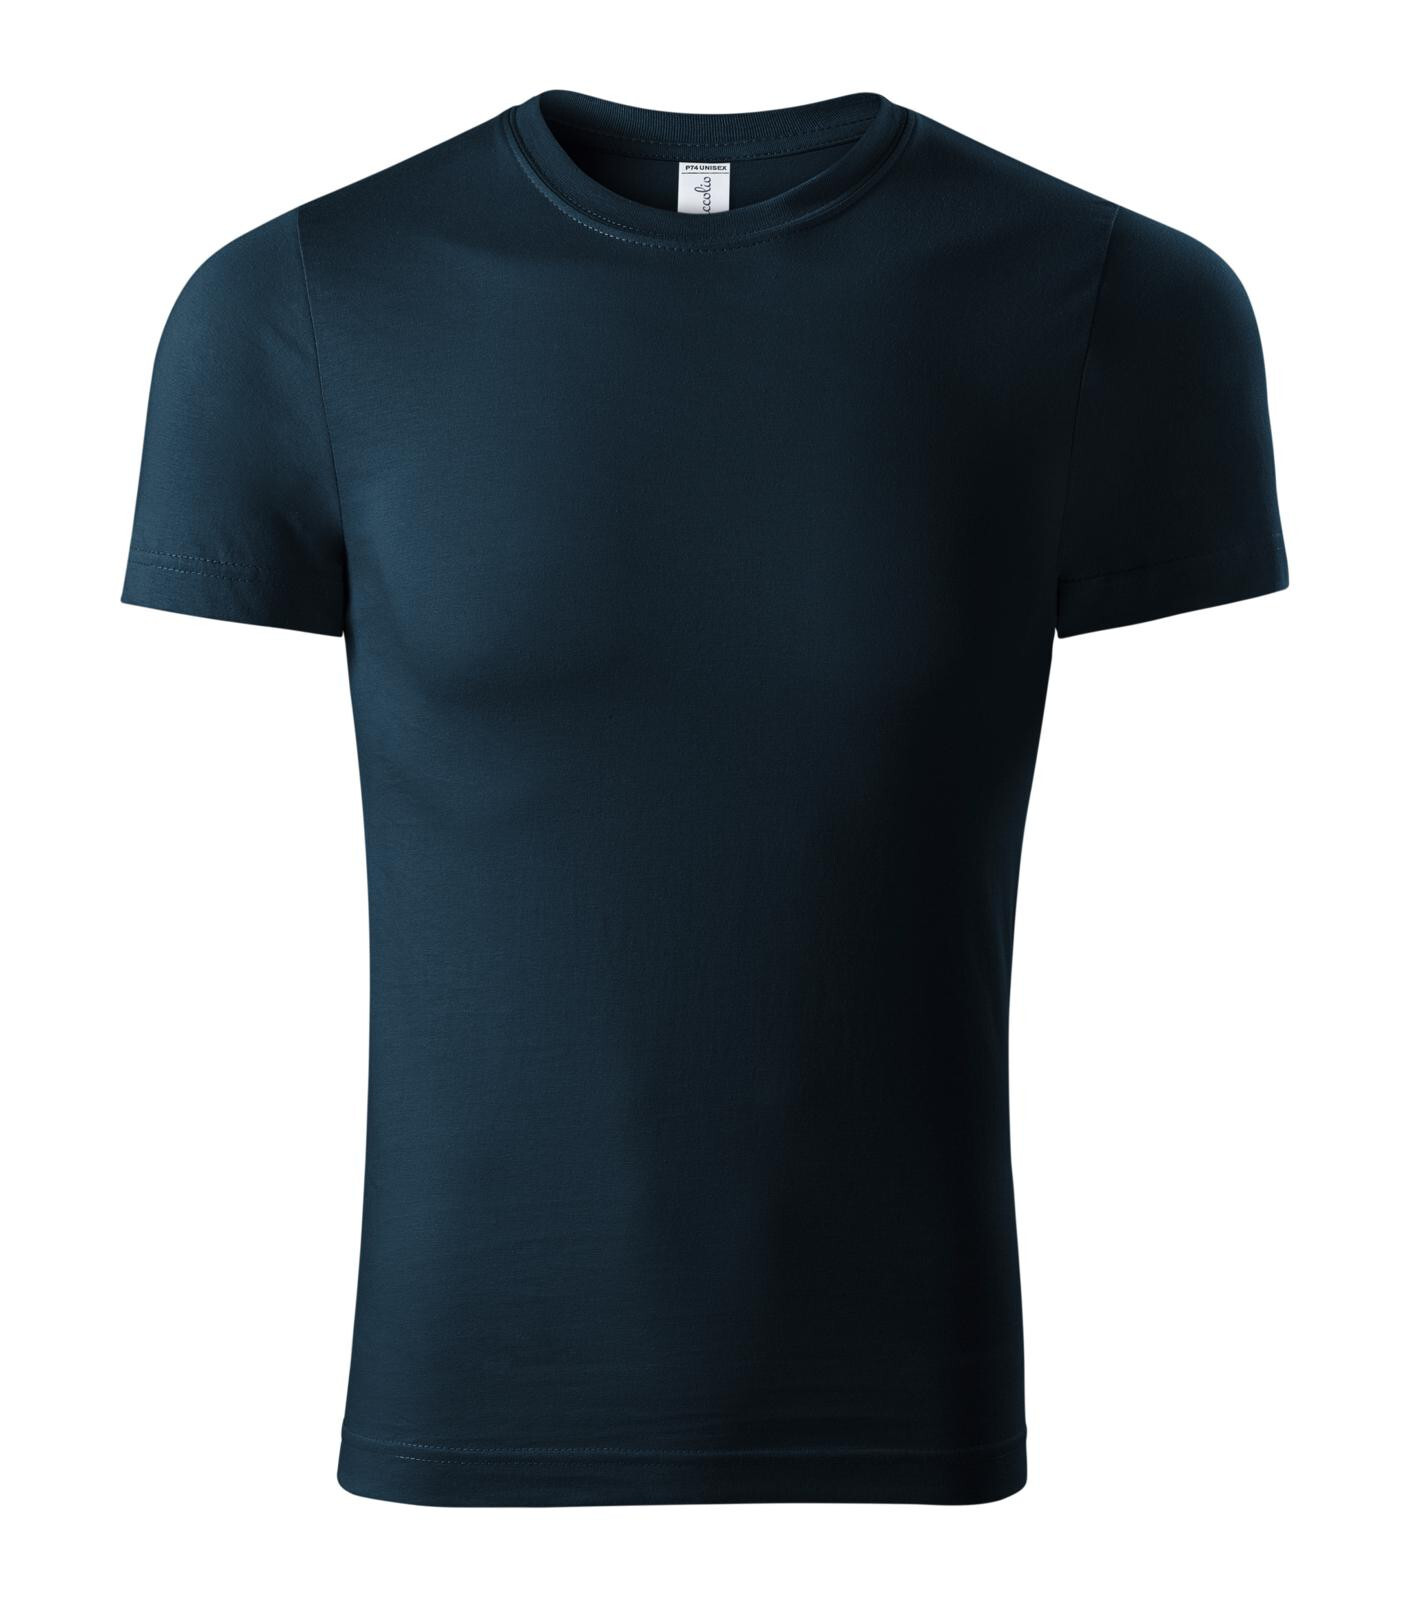 Unisex bavlnené tričko Piccolio Peak P74 - veľkosť: M, farba: tmavo modrá